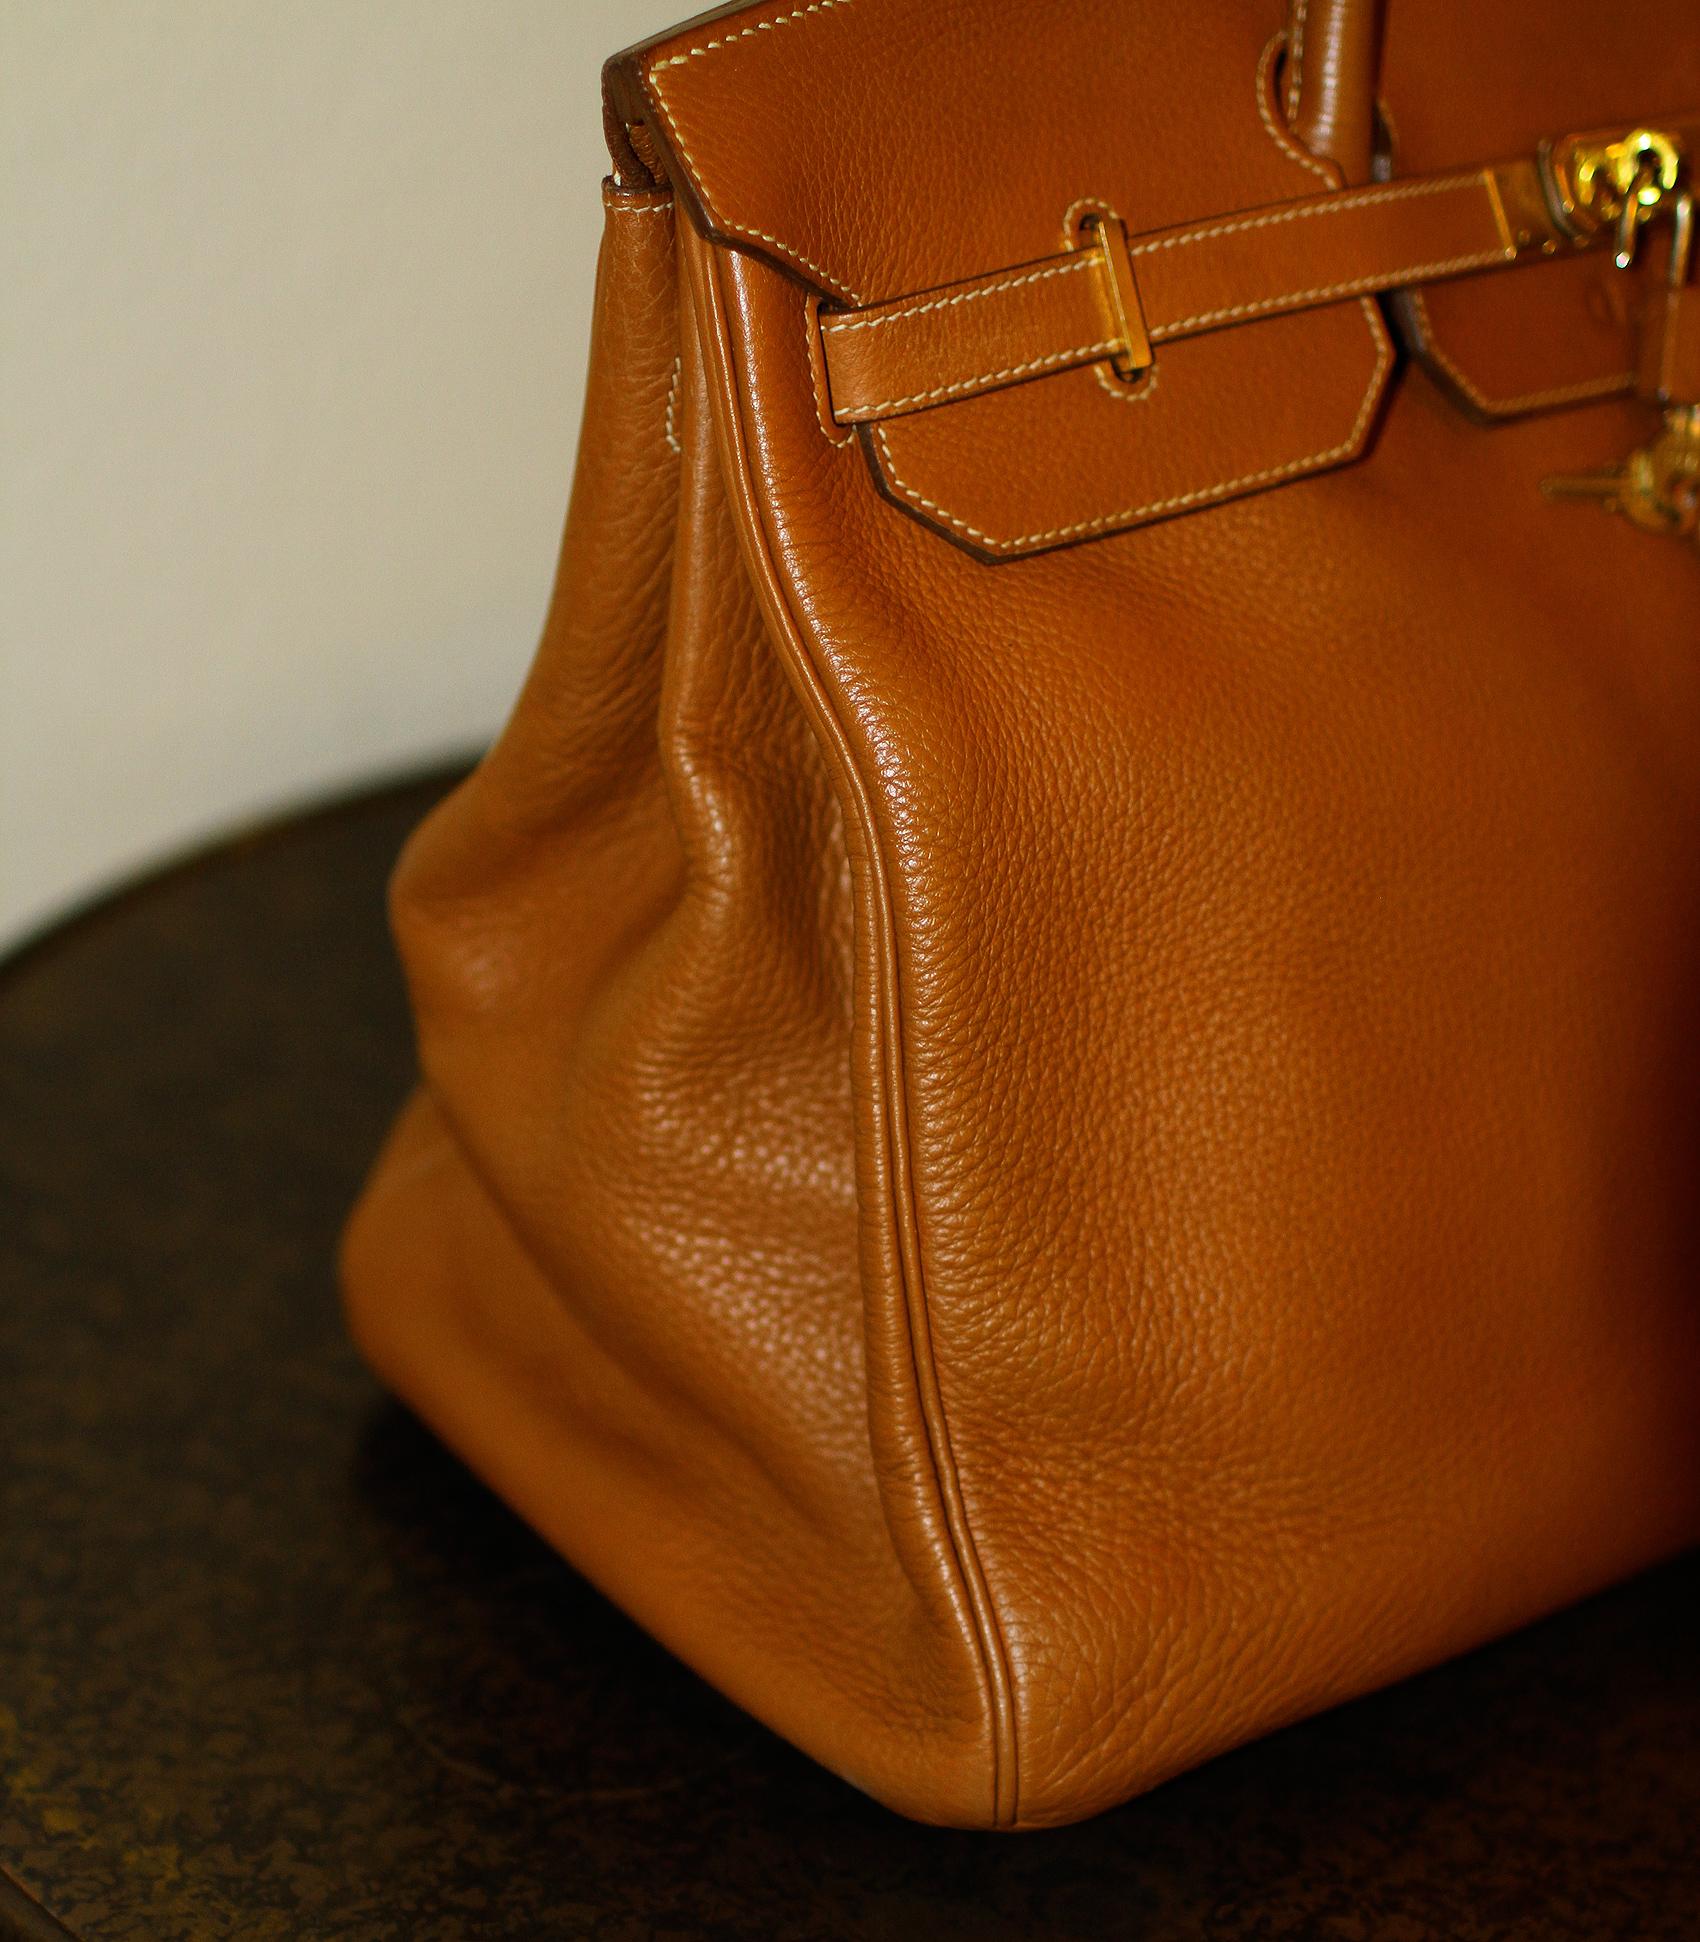 Contemporary Hermes Birkin Bag 40 from Hermès Staff